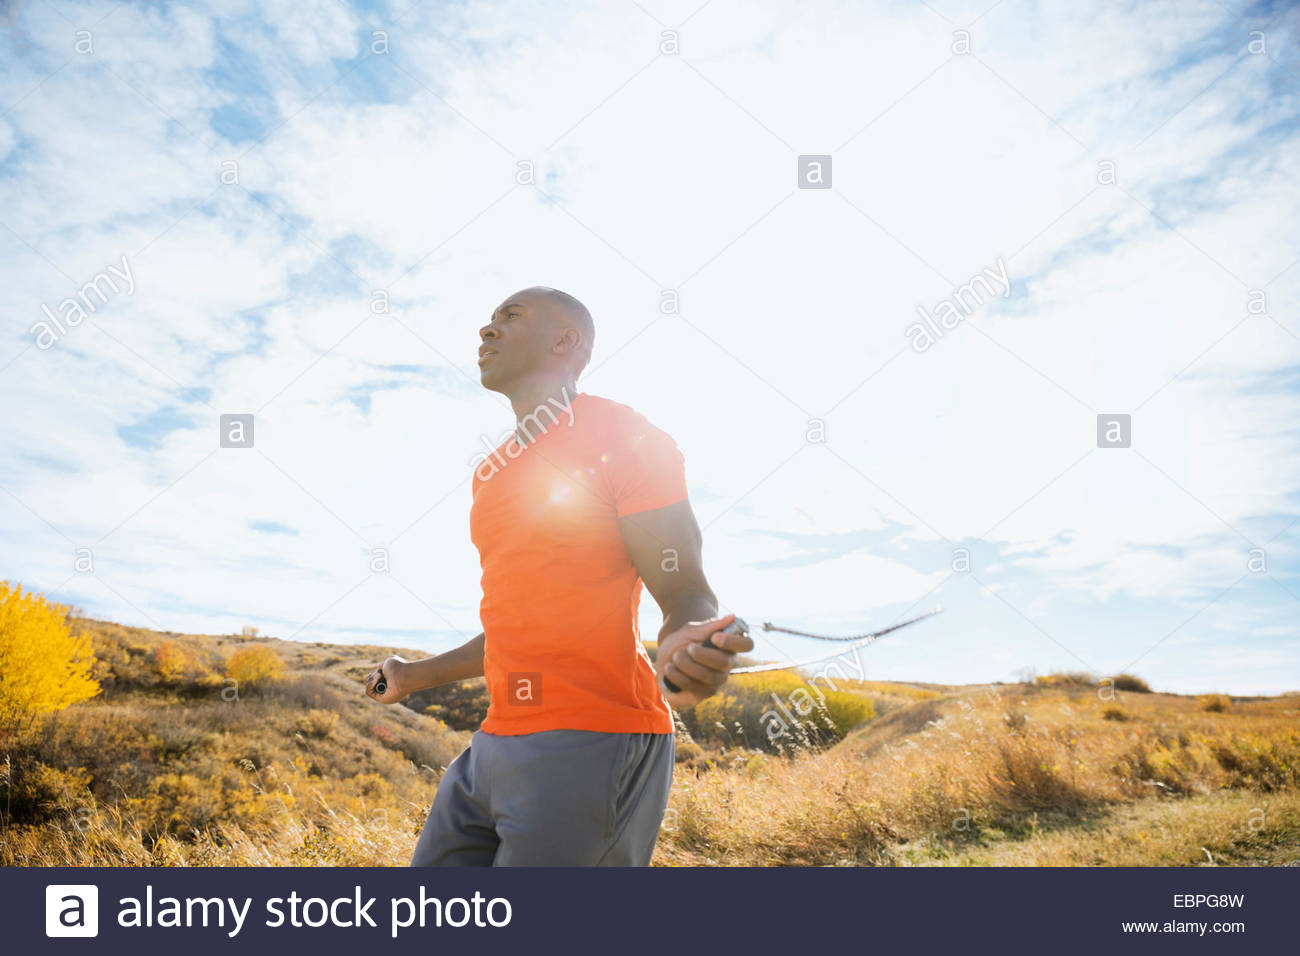 Man jump roping in rural field Stock Photo